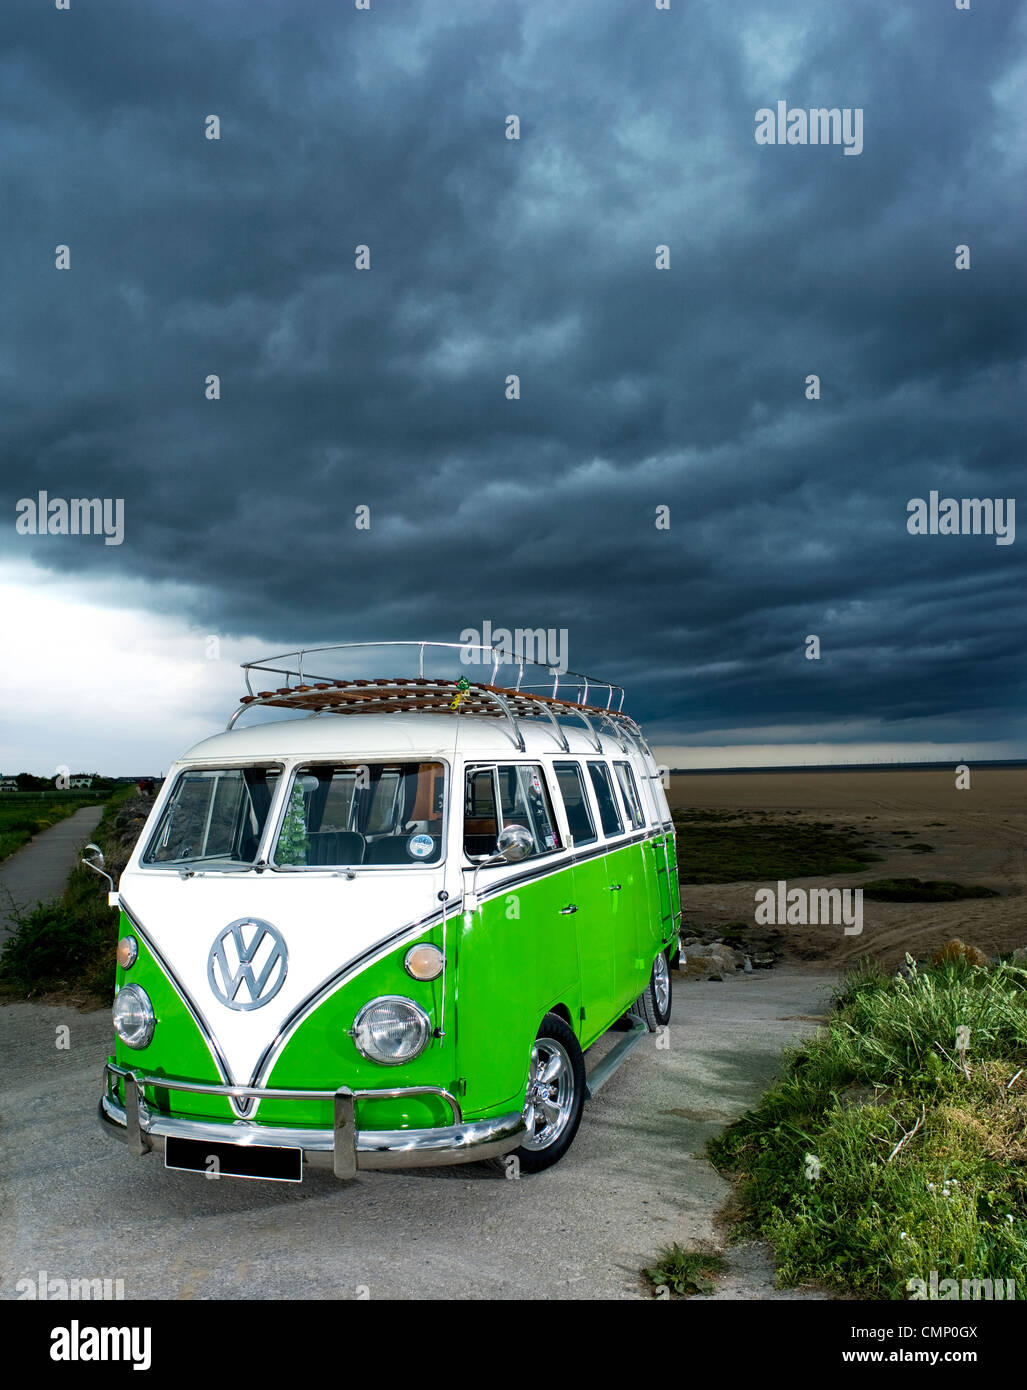 green vw volkswagen split screen camper van bus hippie hippy 1960s 1950s aircooled retro beach british rain cloudy bad weather Stock Photo